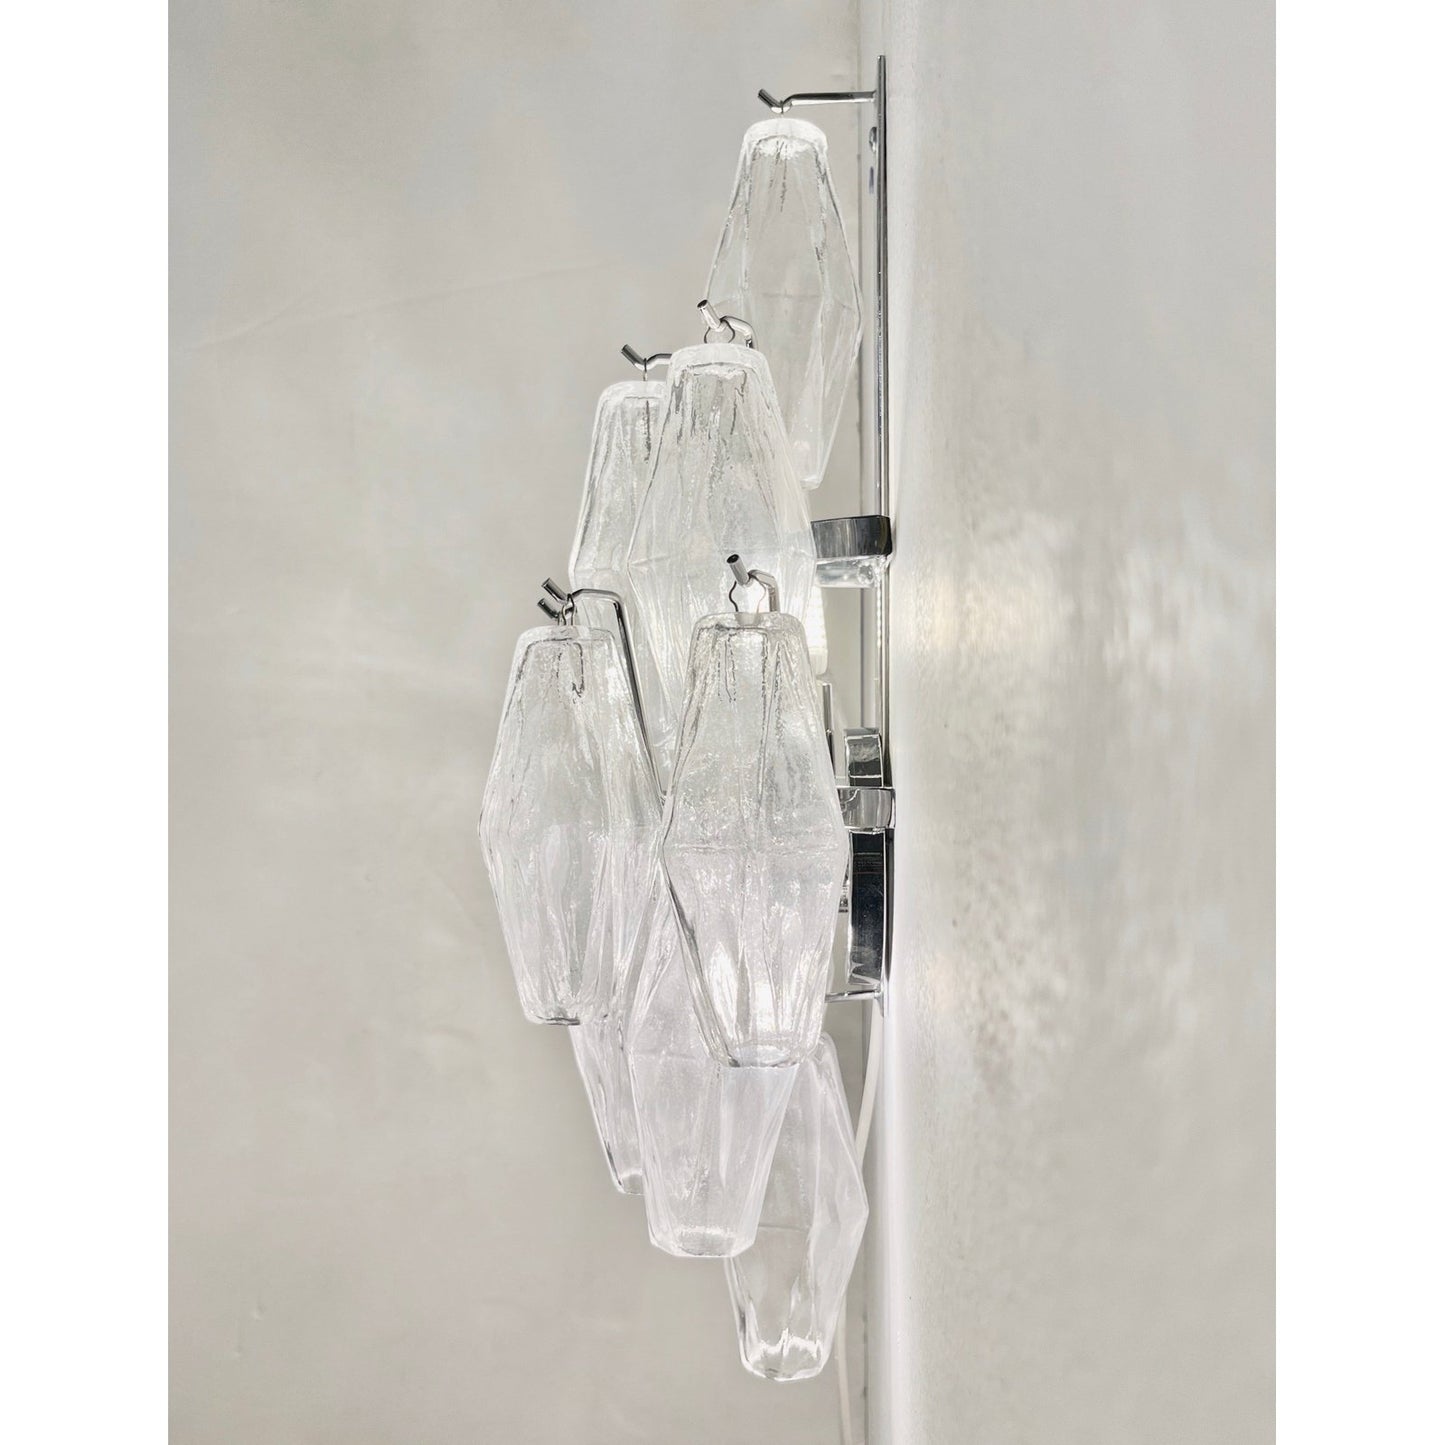 Contemporary Italian Poliedri Crystal Clear Murano Glass Multi-Tier Wall Lights